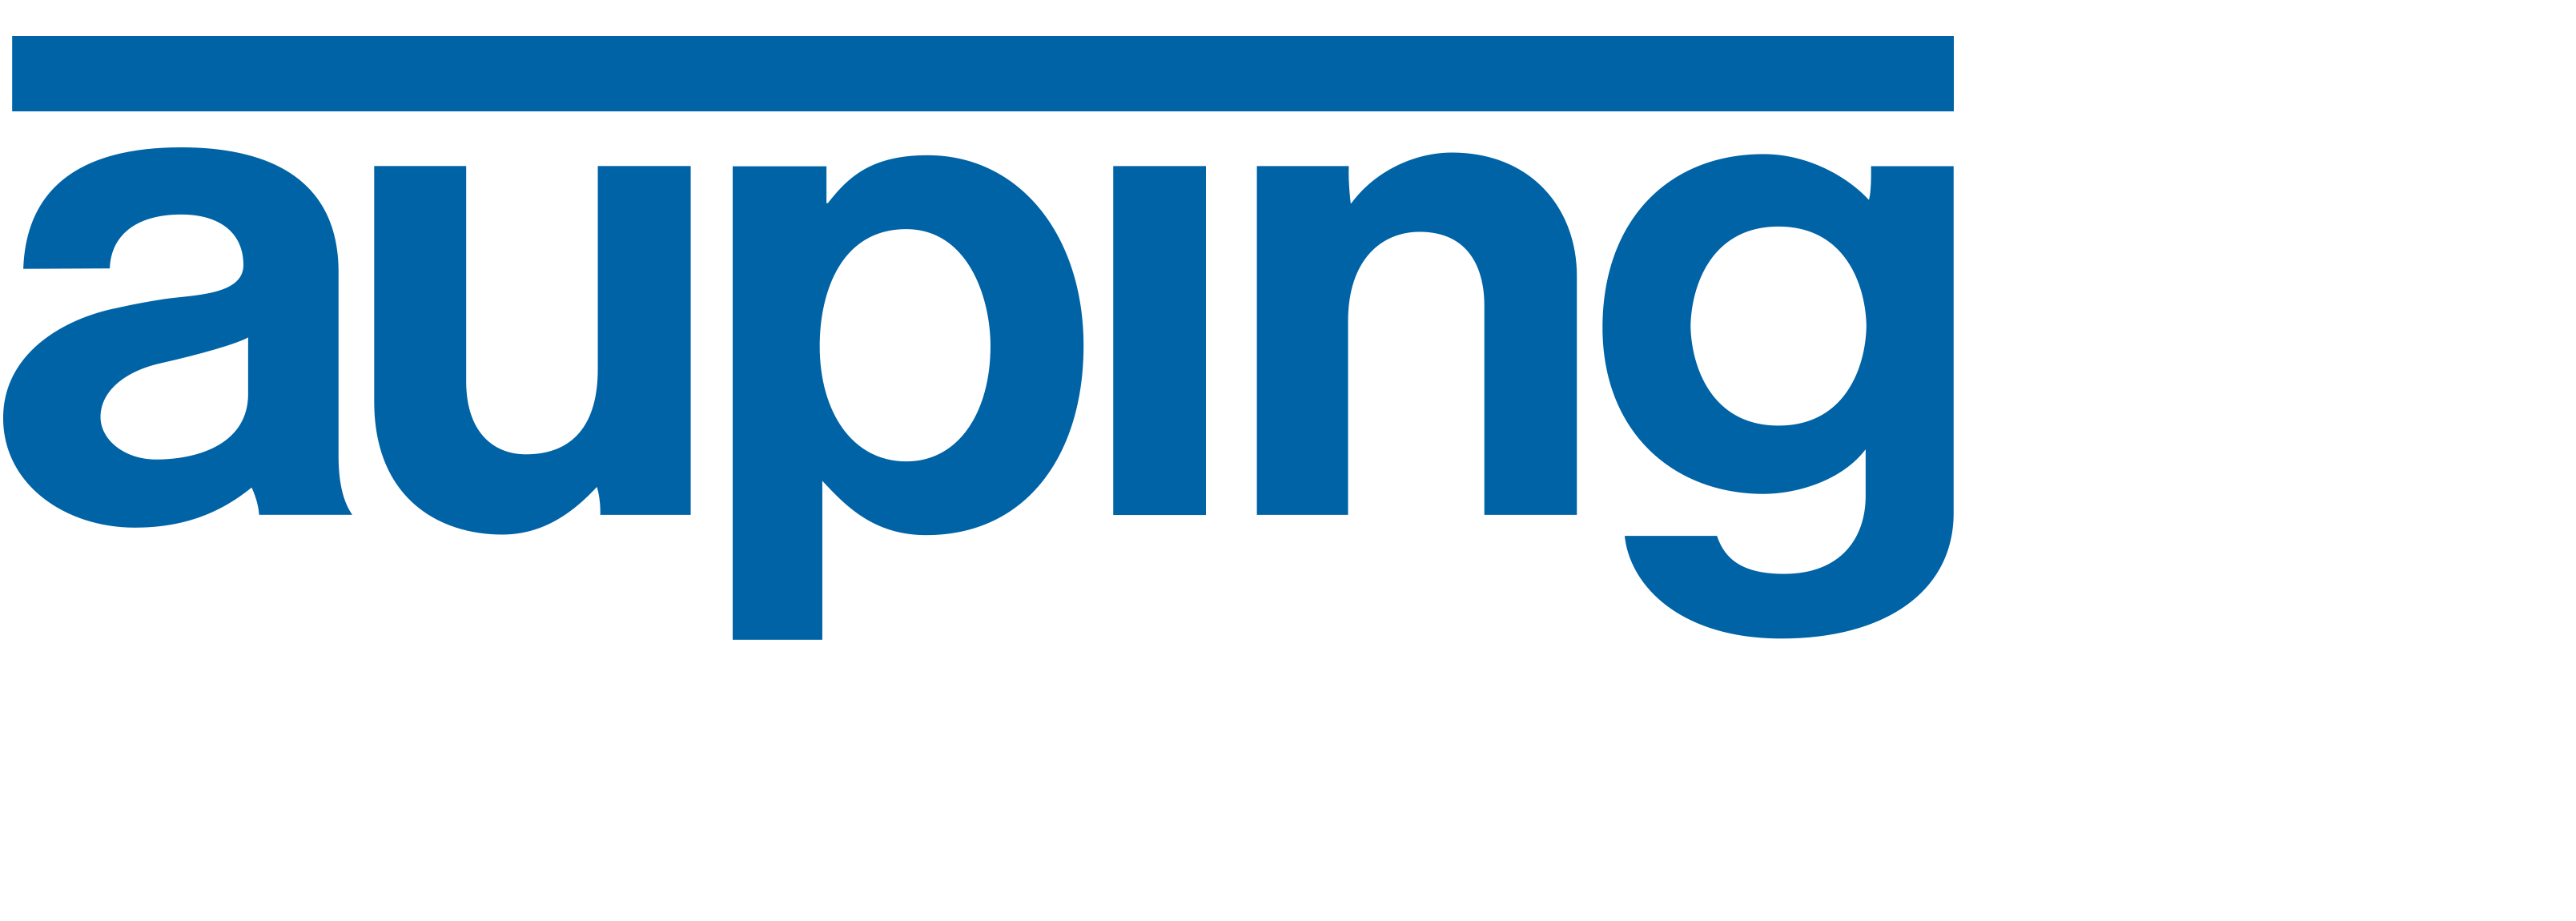 001-merken/auping/001-logos/auping-logo.png